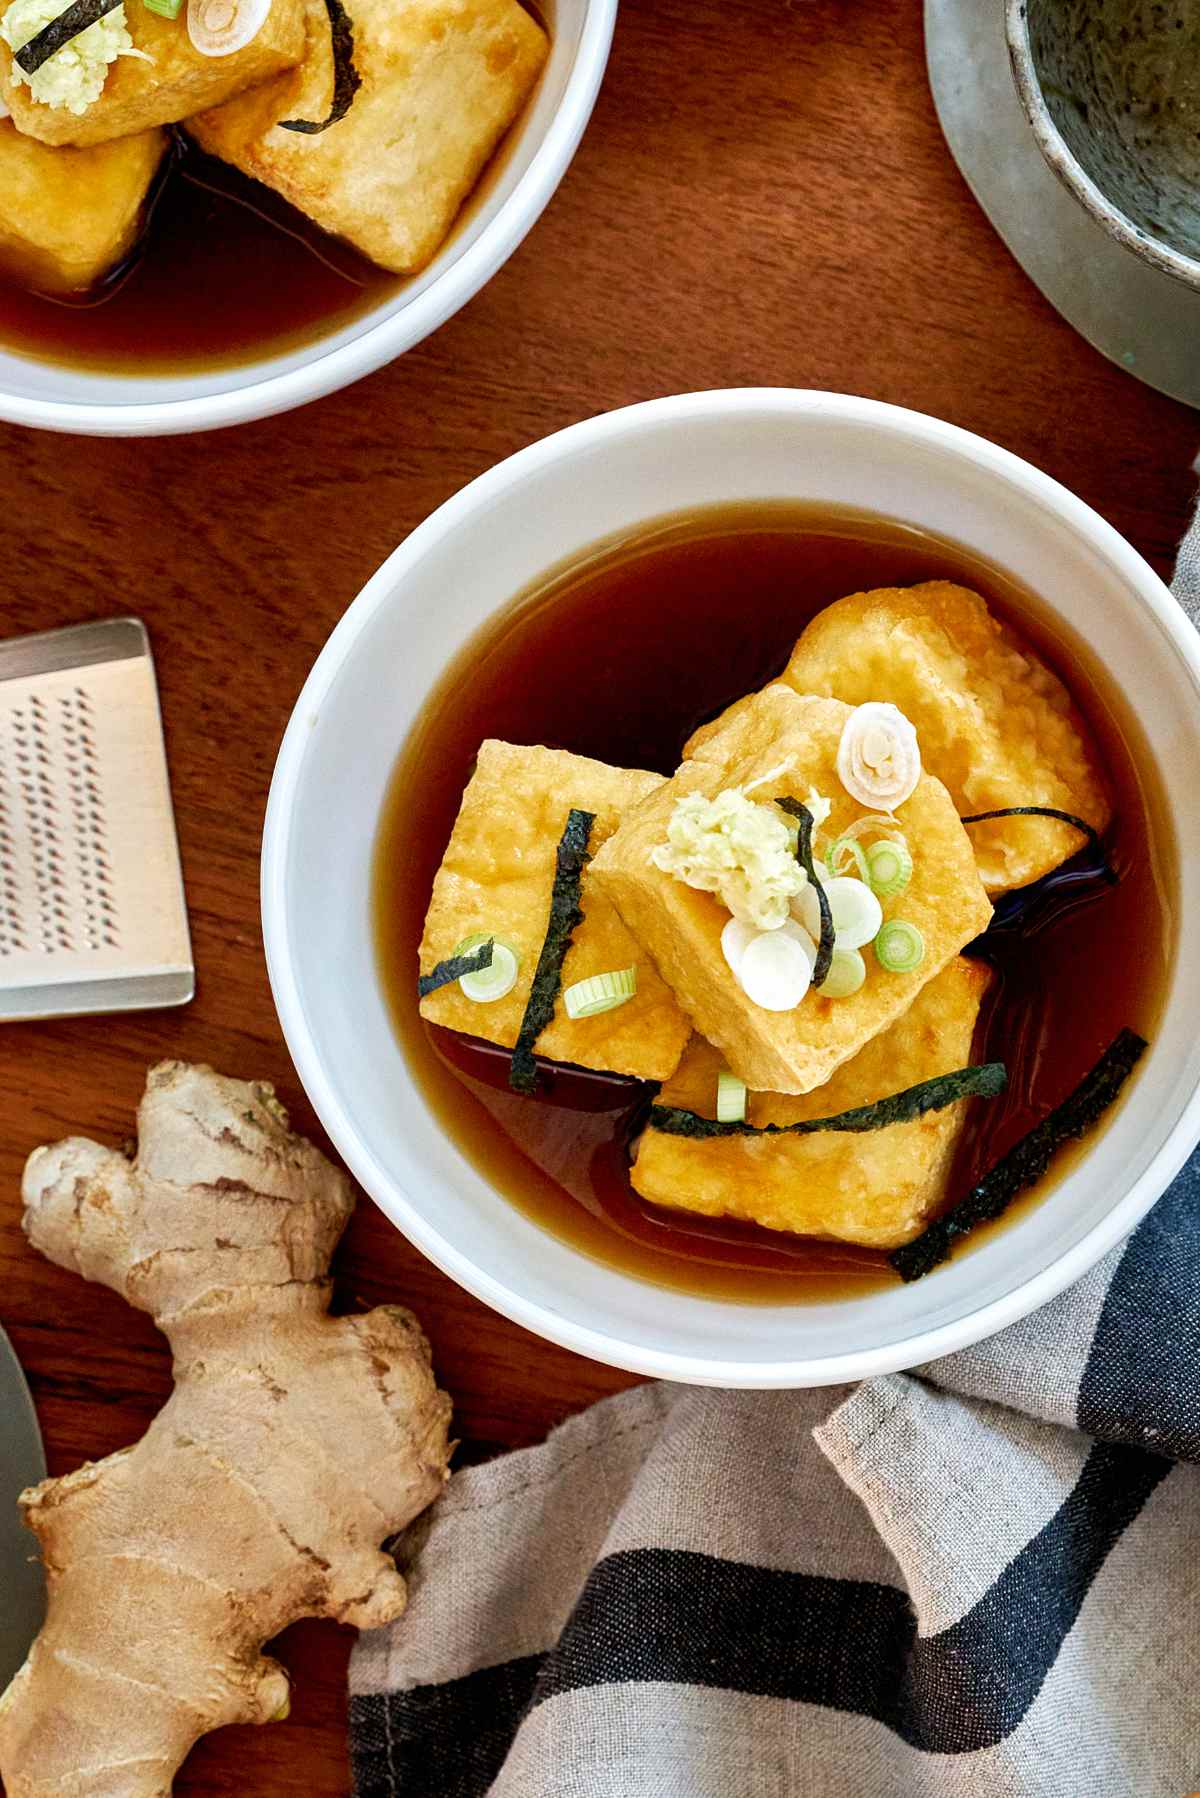 Agedashi tofu in a bowl with brown dashi liquid.